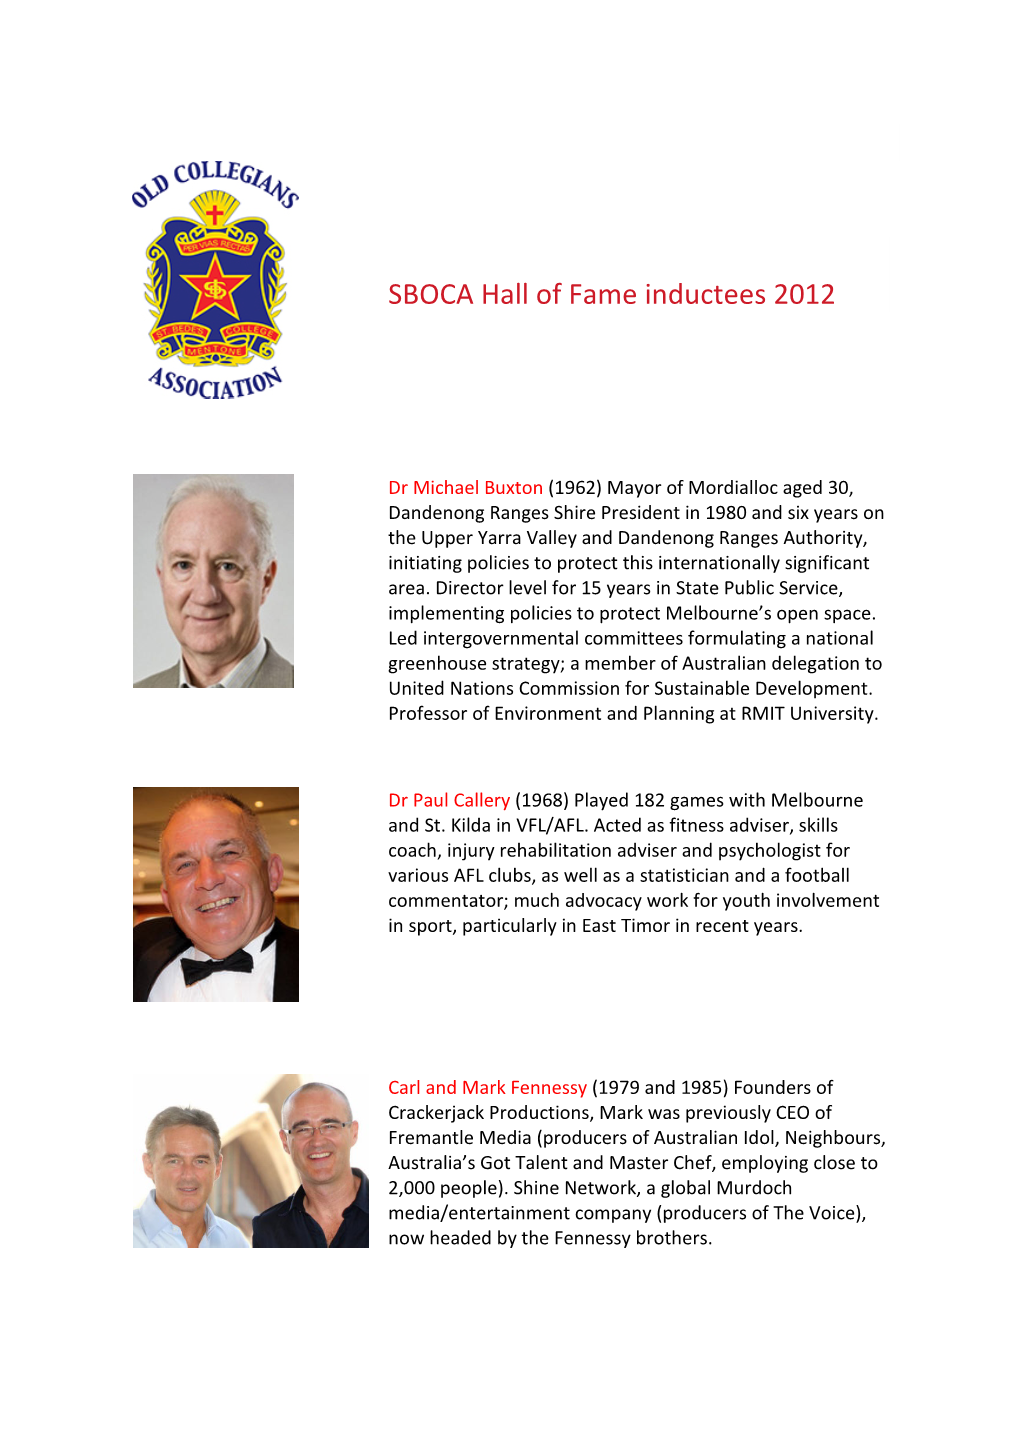 SBOCA Hall of Fame Inductees 2012